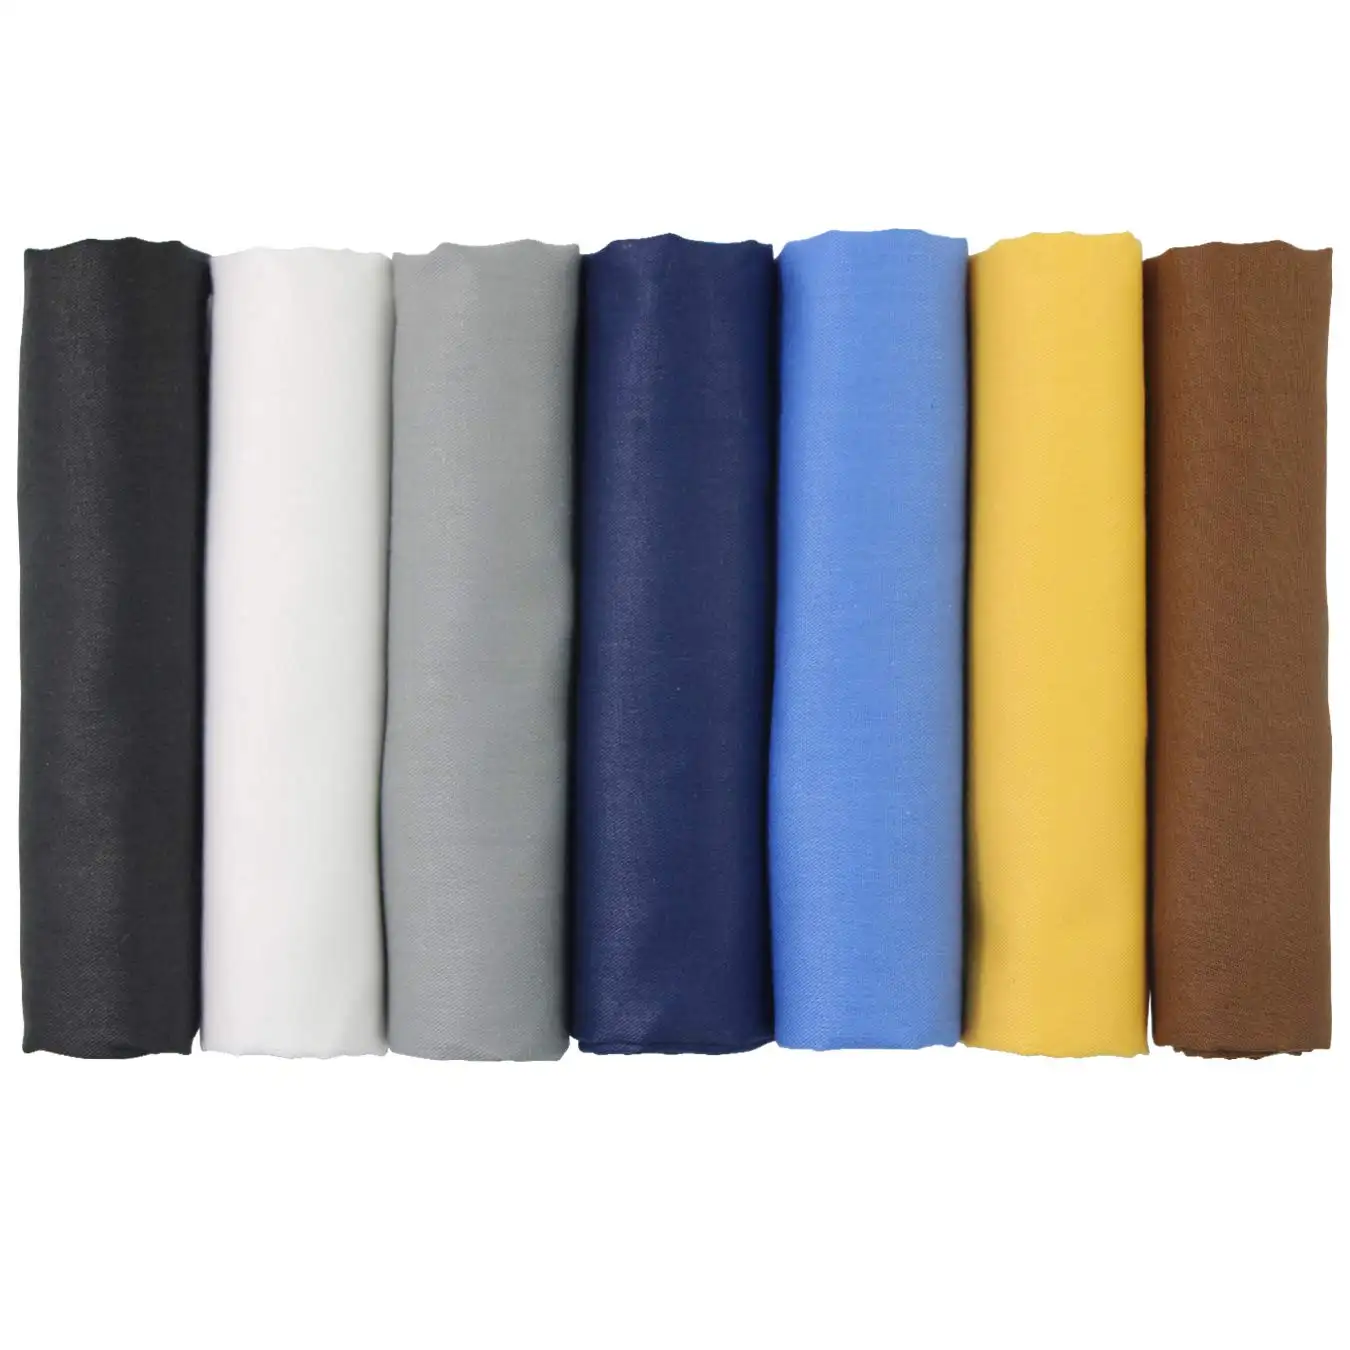 MAN SHIRT FABRIC 제조업체 폴리 에스테르/면 직물을 위한 맞춤형 다채로운 TC 짠 셔팅 폴리 에스테르 코튼 셔츠 원단